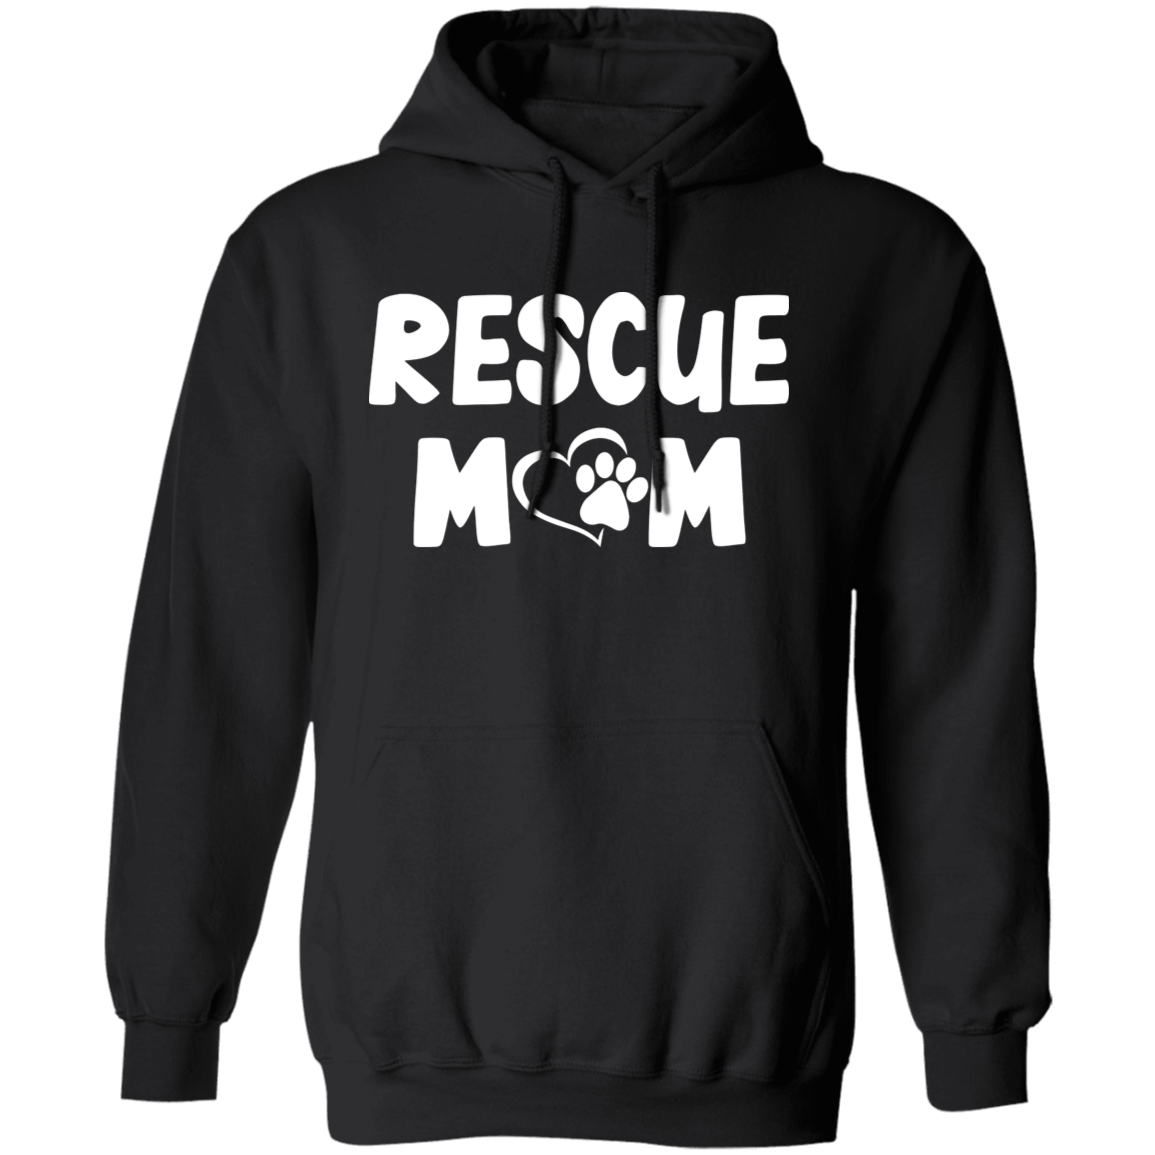 Rescue Mom - Hoodie.